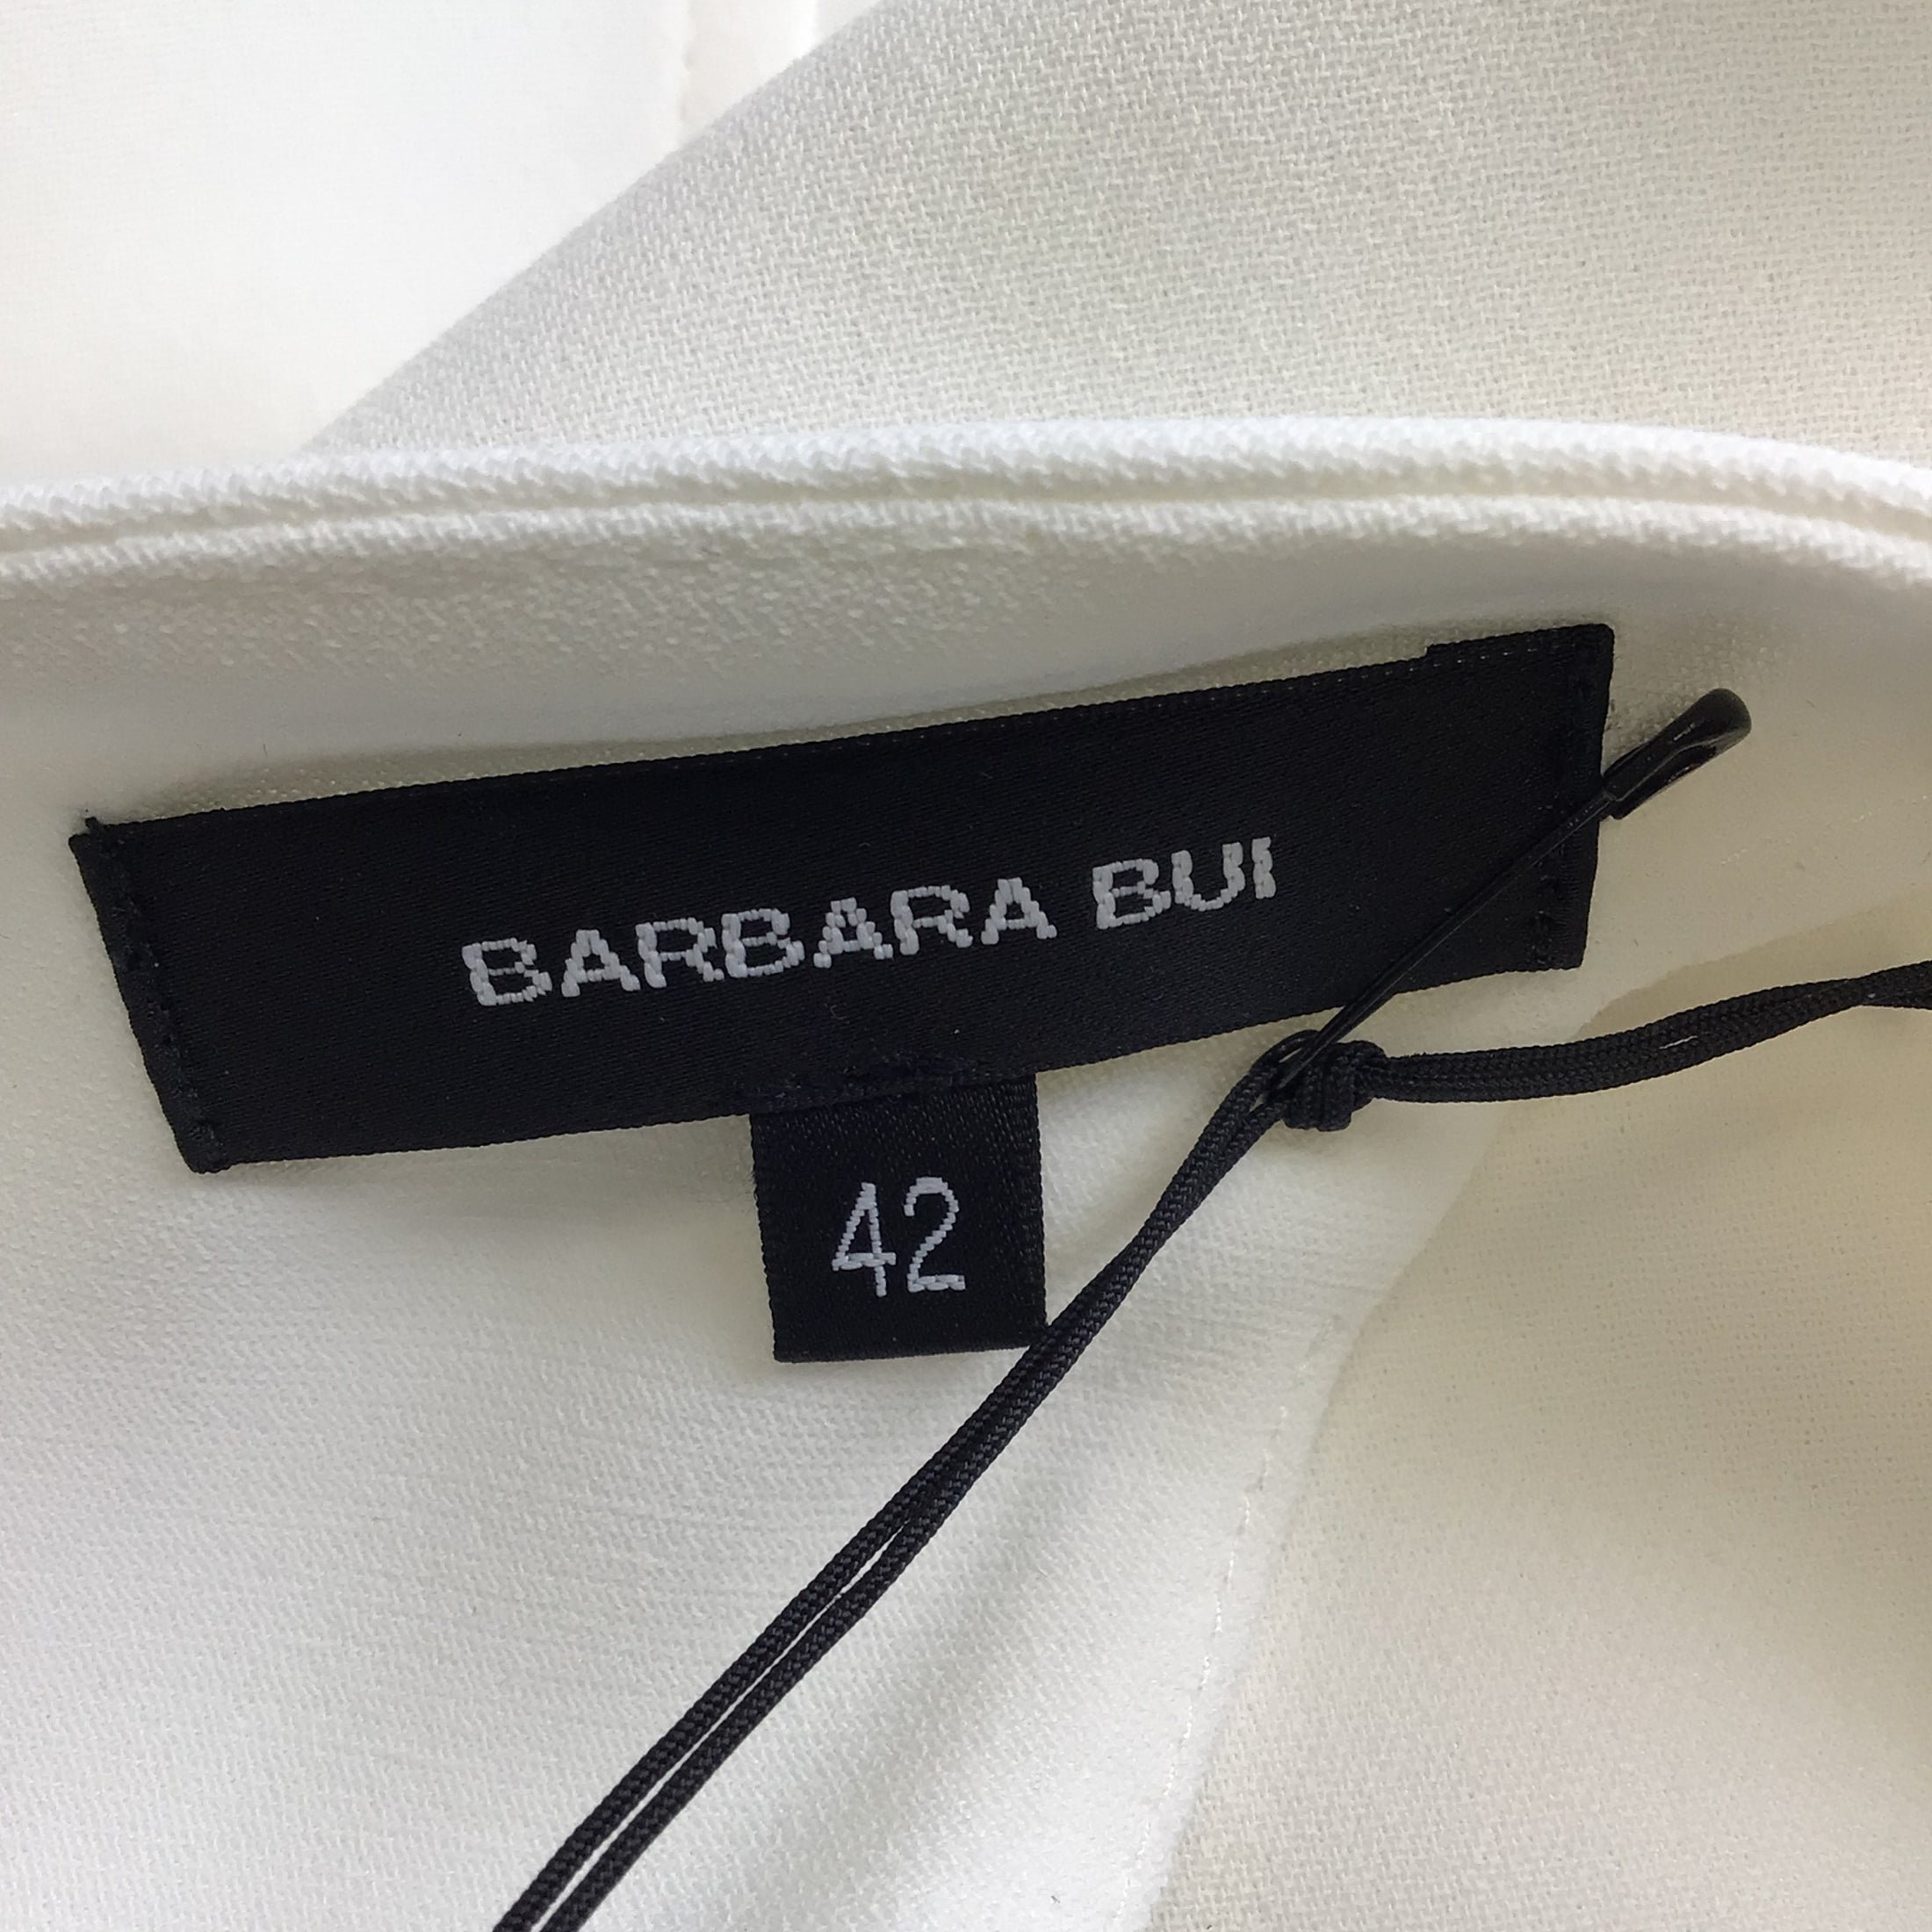 Barbara Bui White / Silver Buckle Sleeveless Crepe Mini Dress